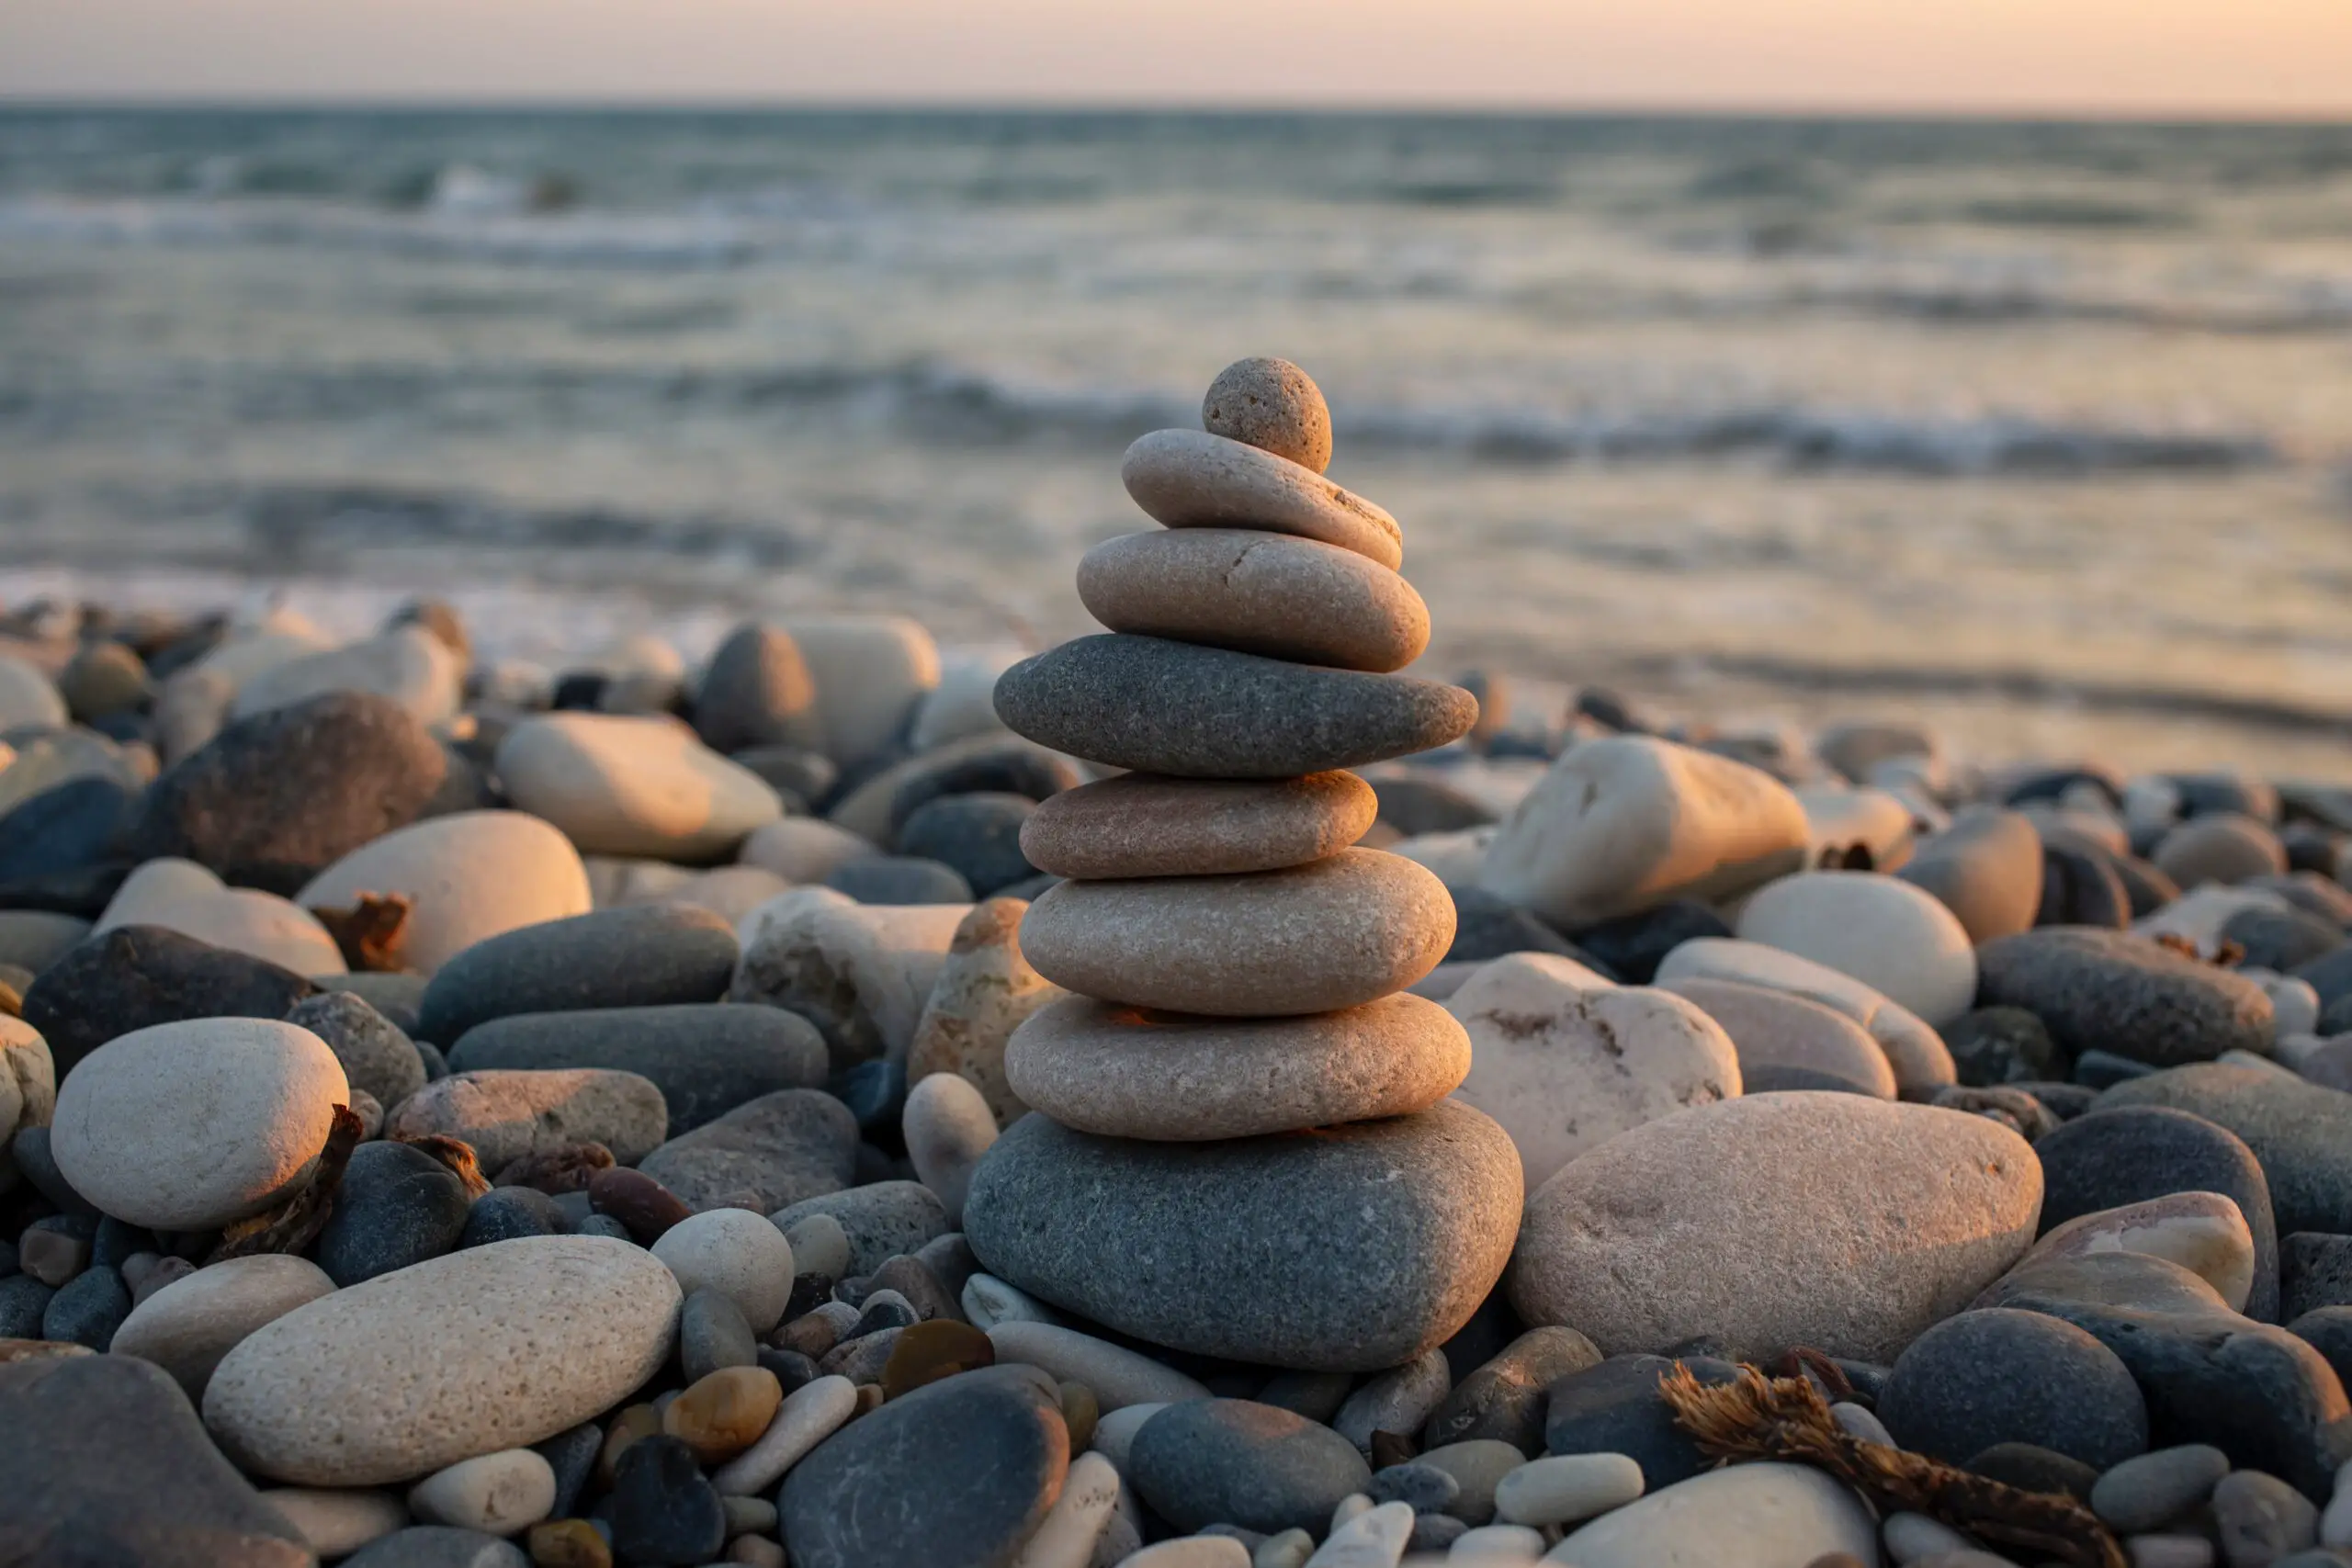 rock stacks can be calming